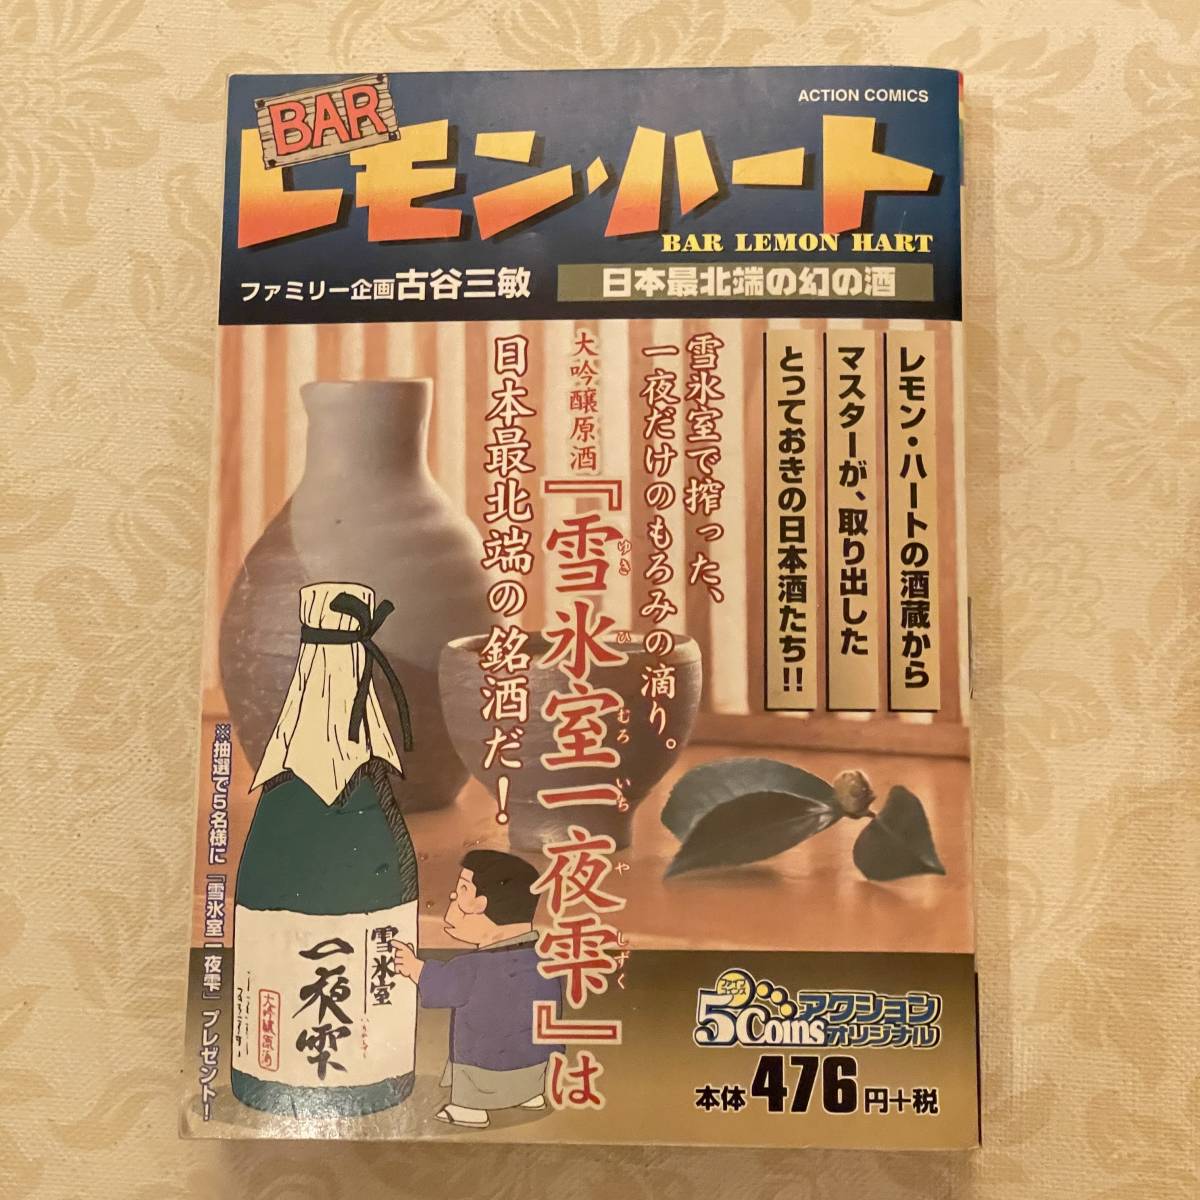 USED BARレモン・ハート 日本最北端の幻の酒 (アクションコミックス 5Coinsアクションオリジナル)_画像1